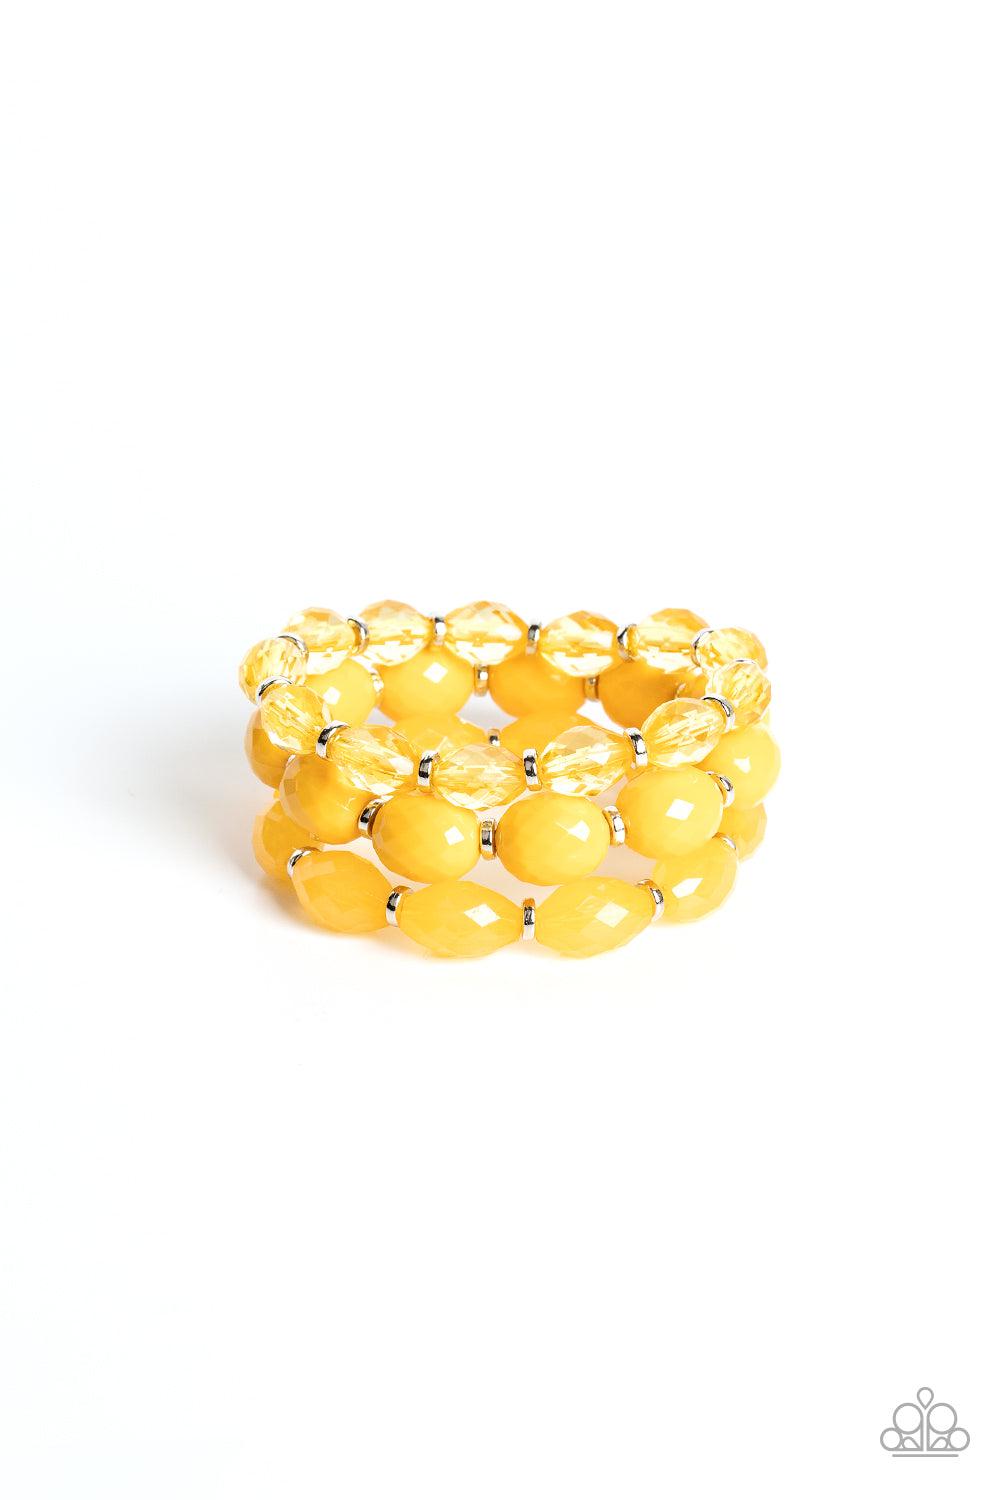 High Tide Hammock Yellow Bracelet - Paparazzi Accessories- lightbox - CarasShop.com - $5 Jewelry by Cara Jewels